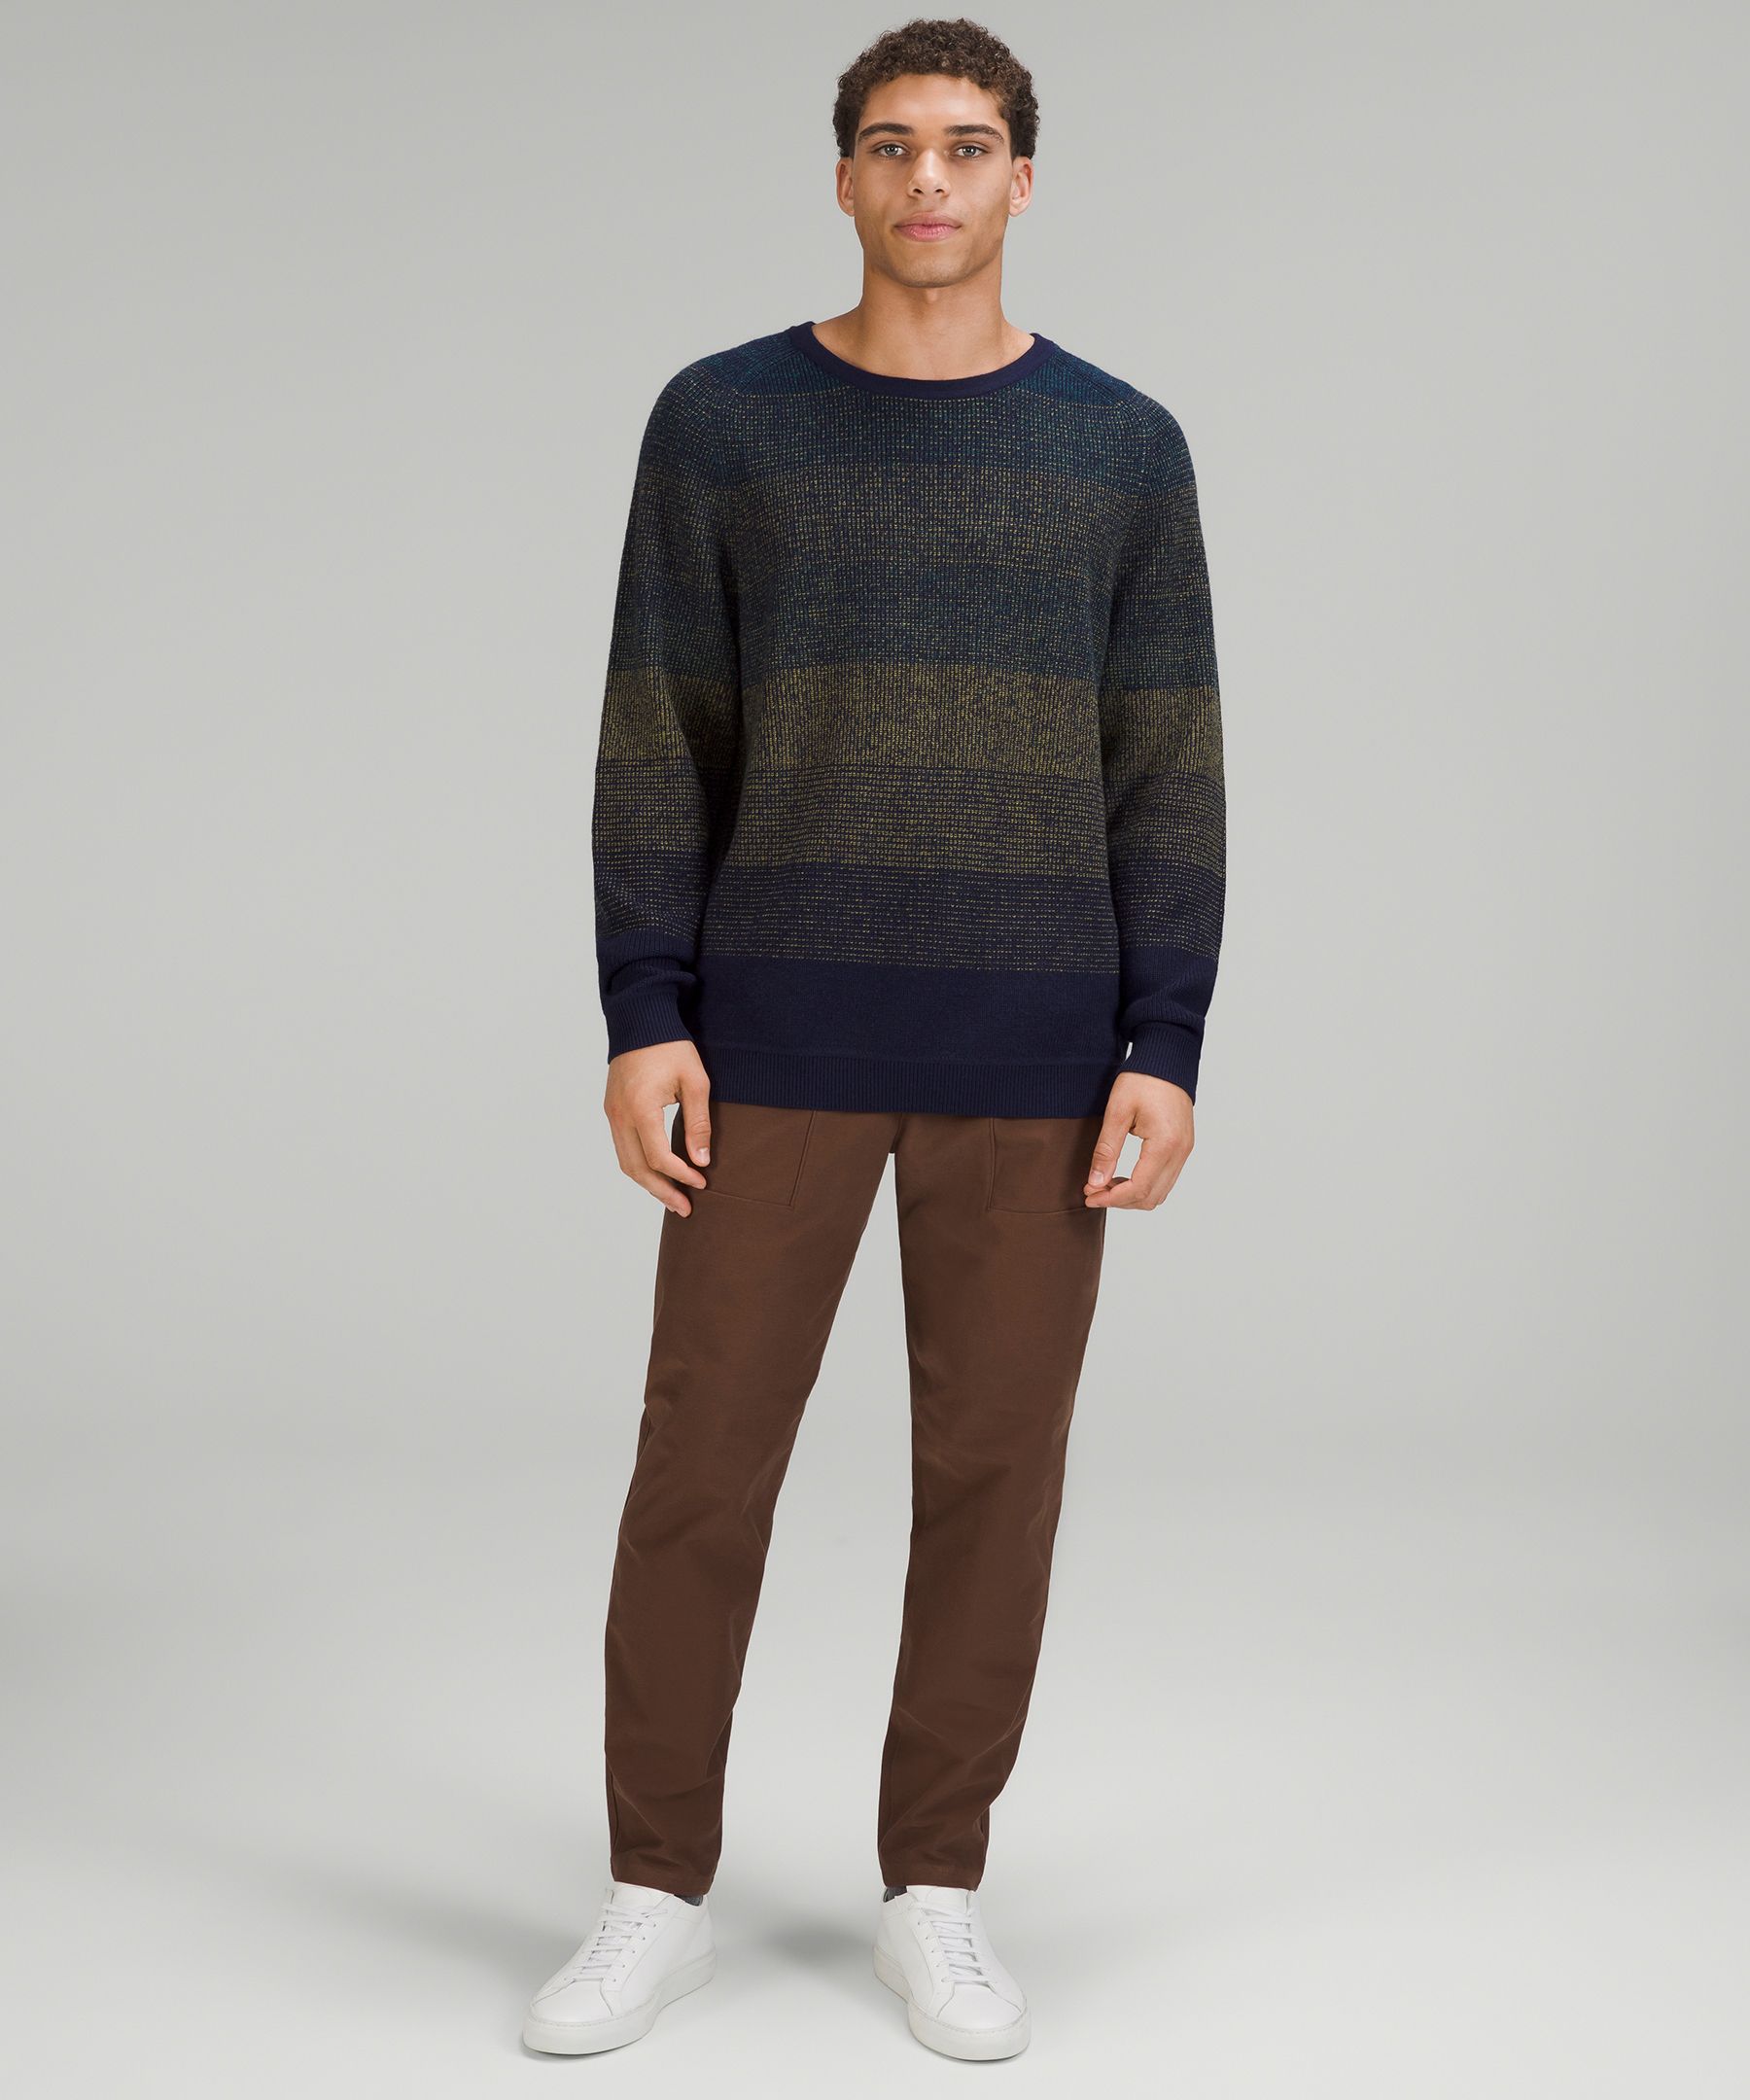 Lululemon + Textured Knit Crewneck Sweater